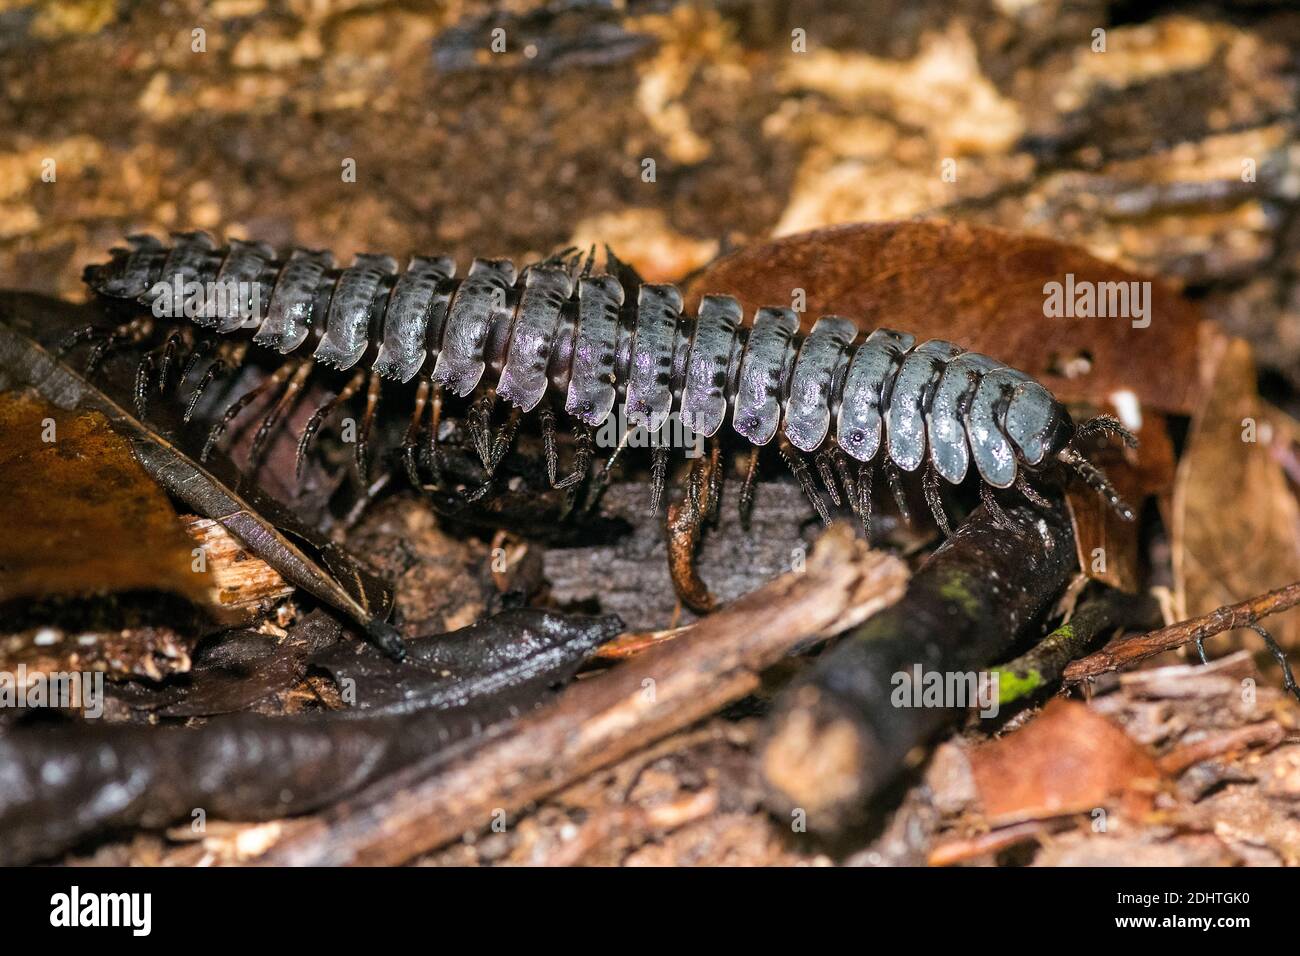 Tracteur millipede, famille Platyrhacidae (possiblement Barydesmus sp.), du parc national Gunung Gading, Sarawak, Bornéo. Banque D'Images